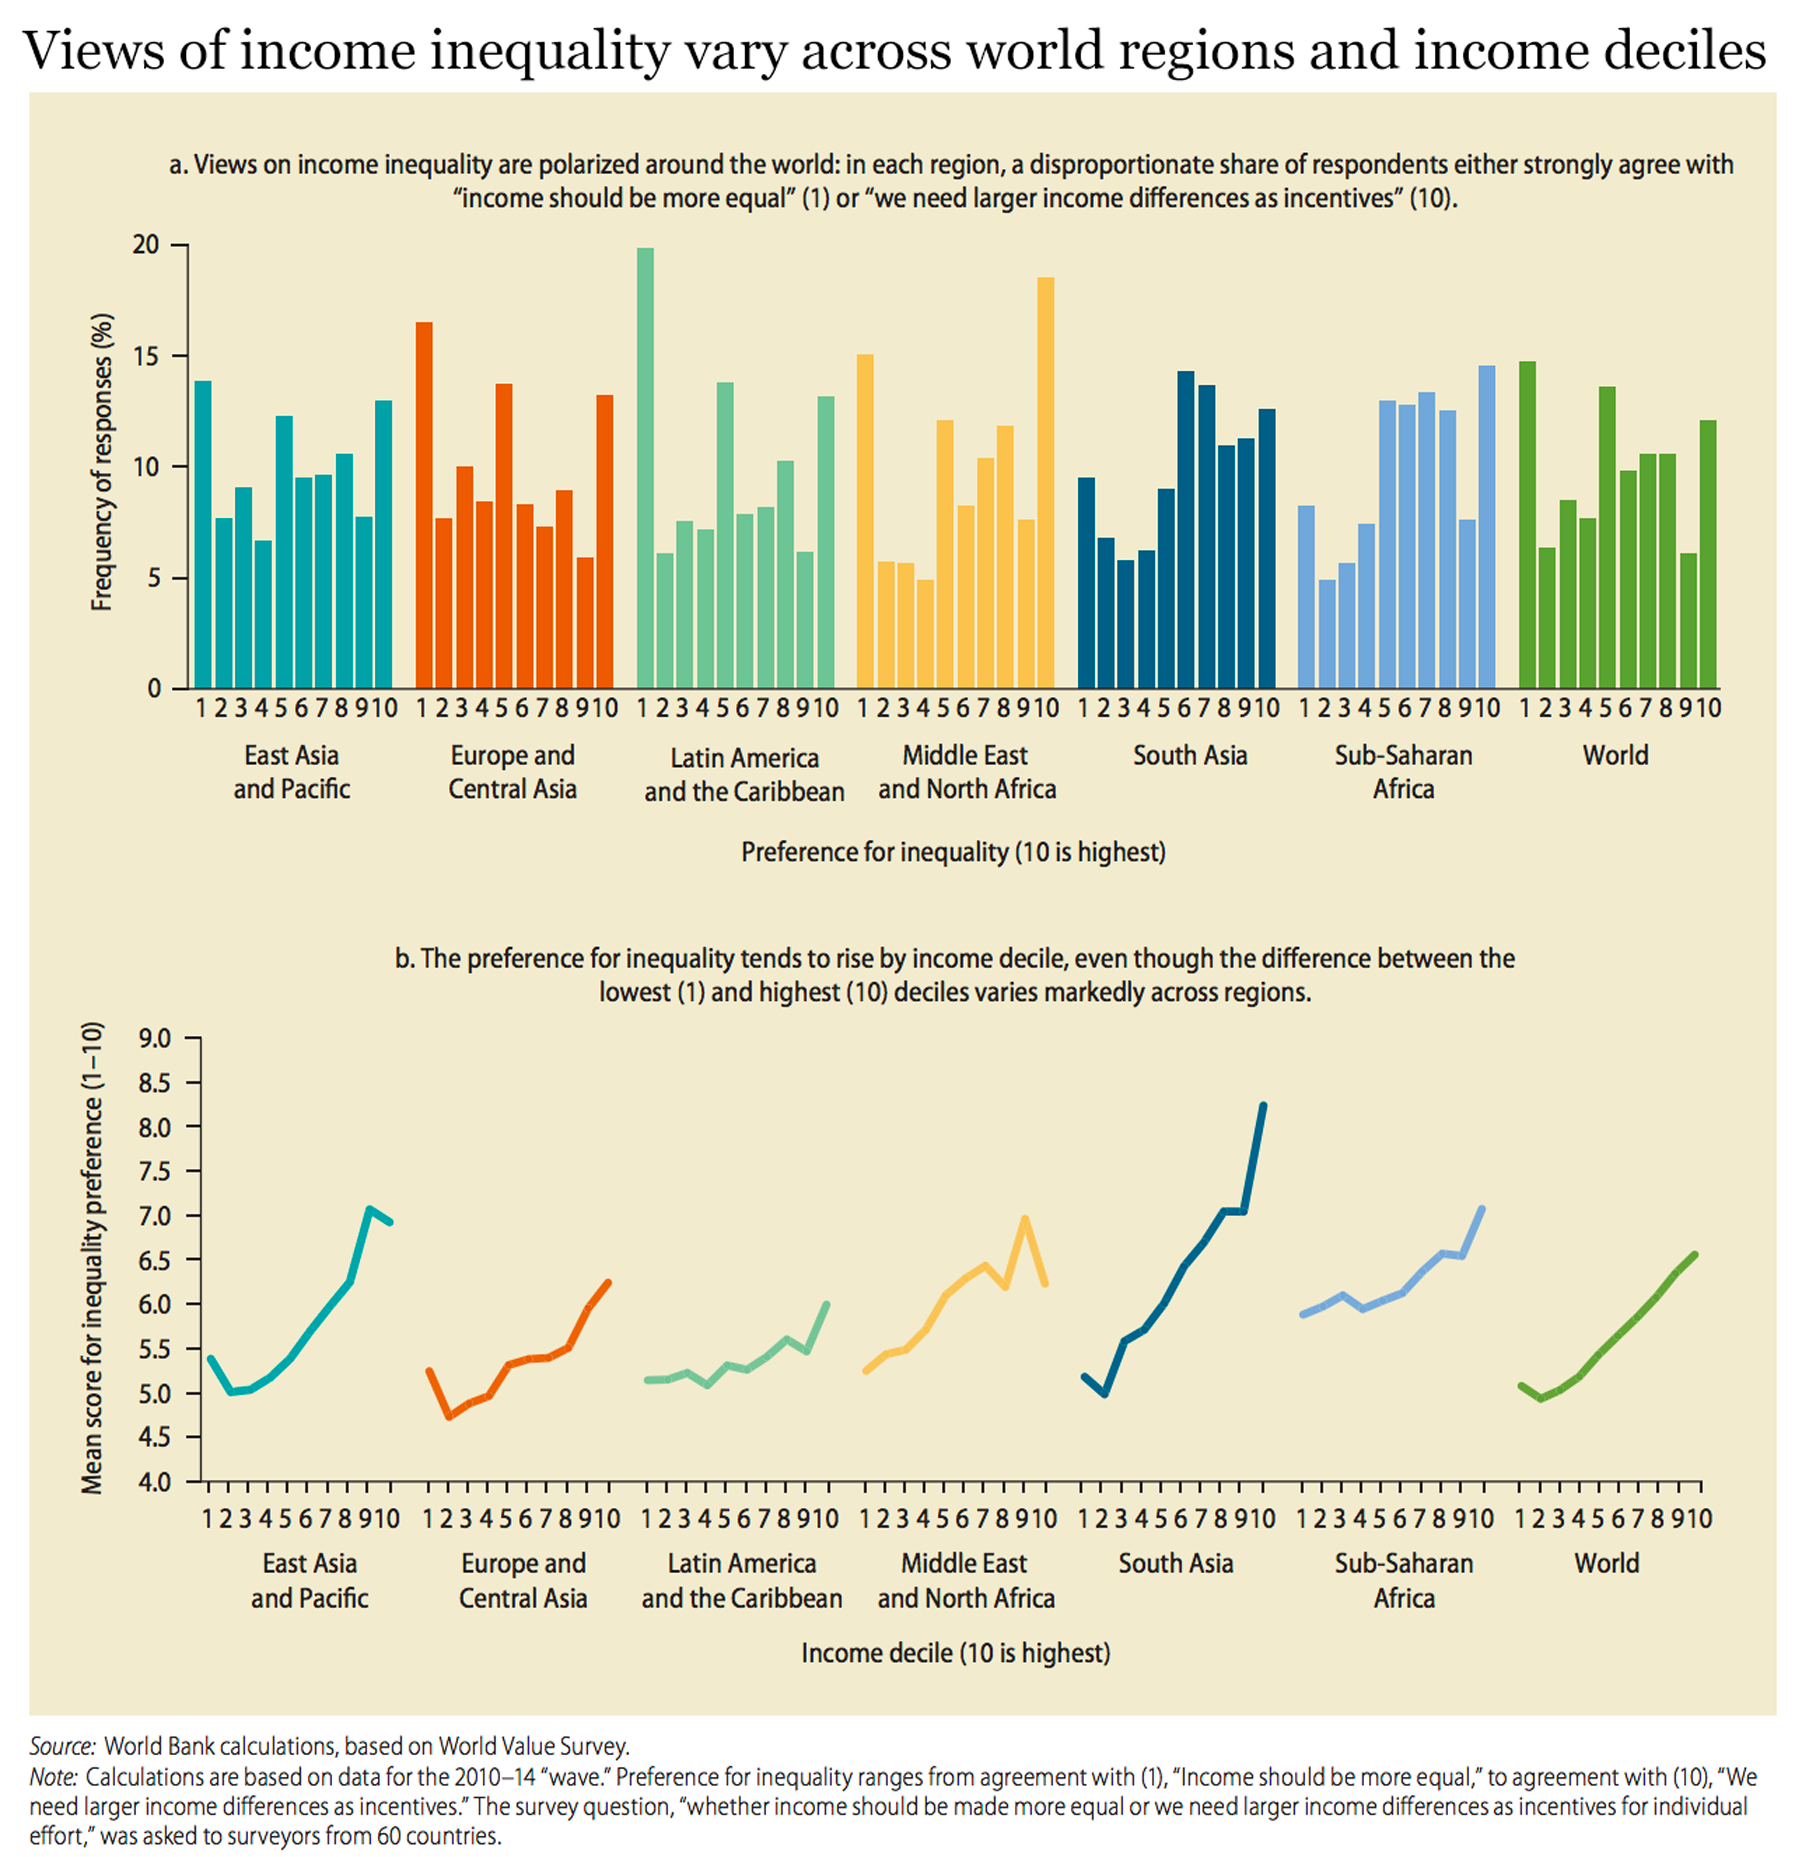 Views on inequality